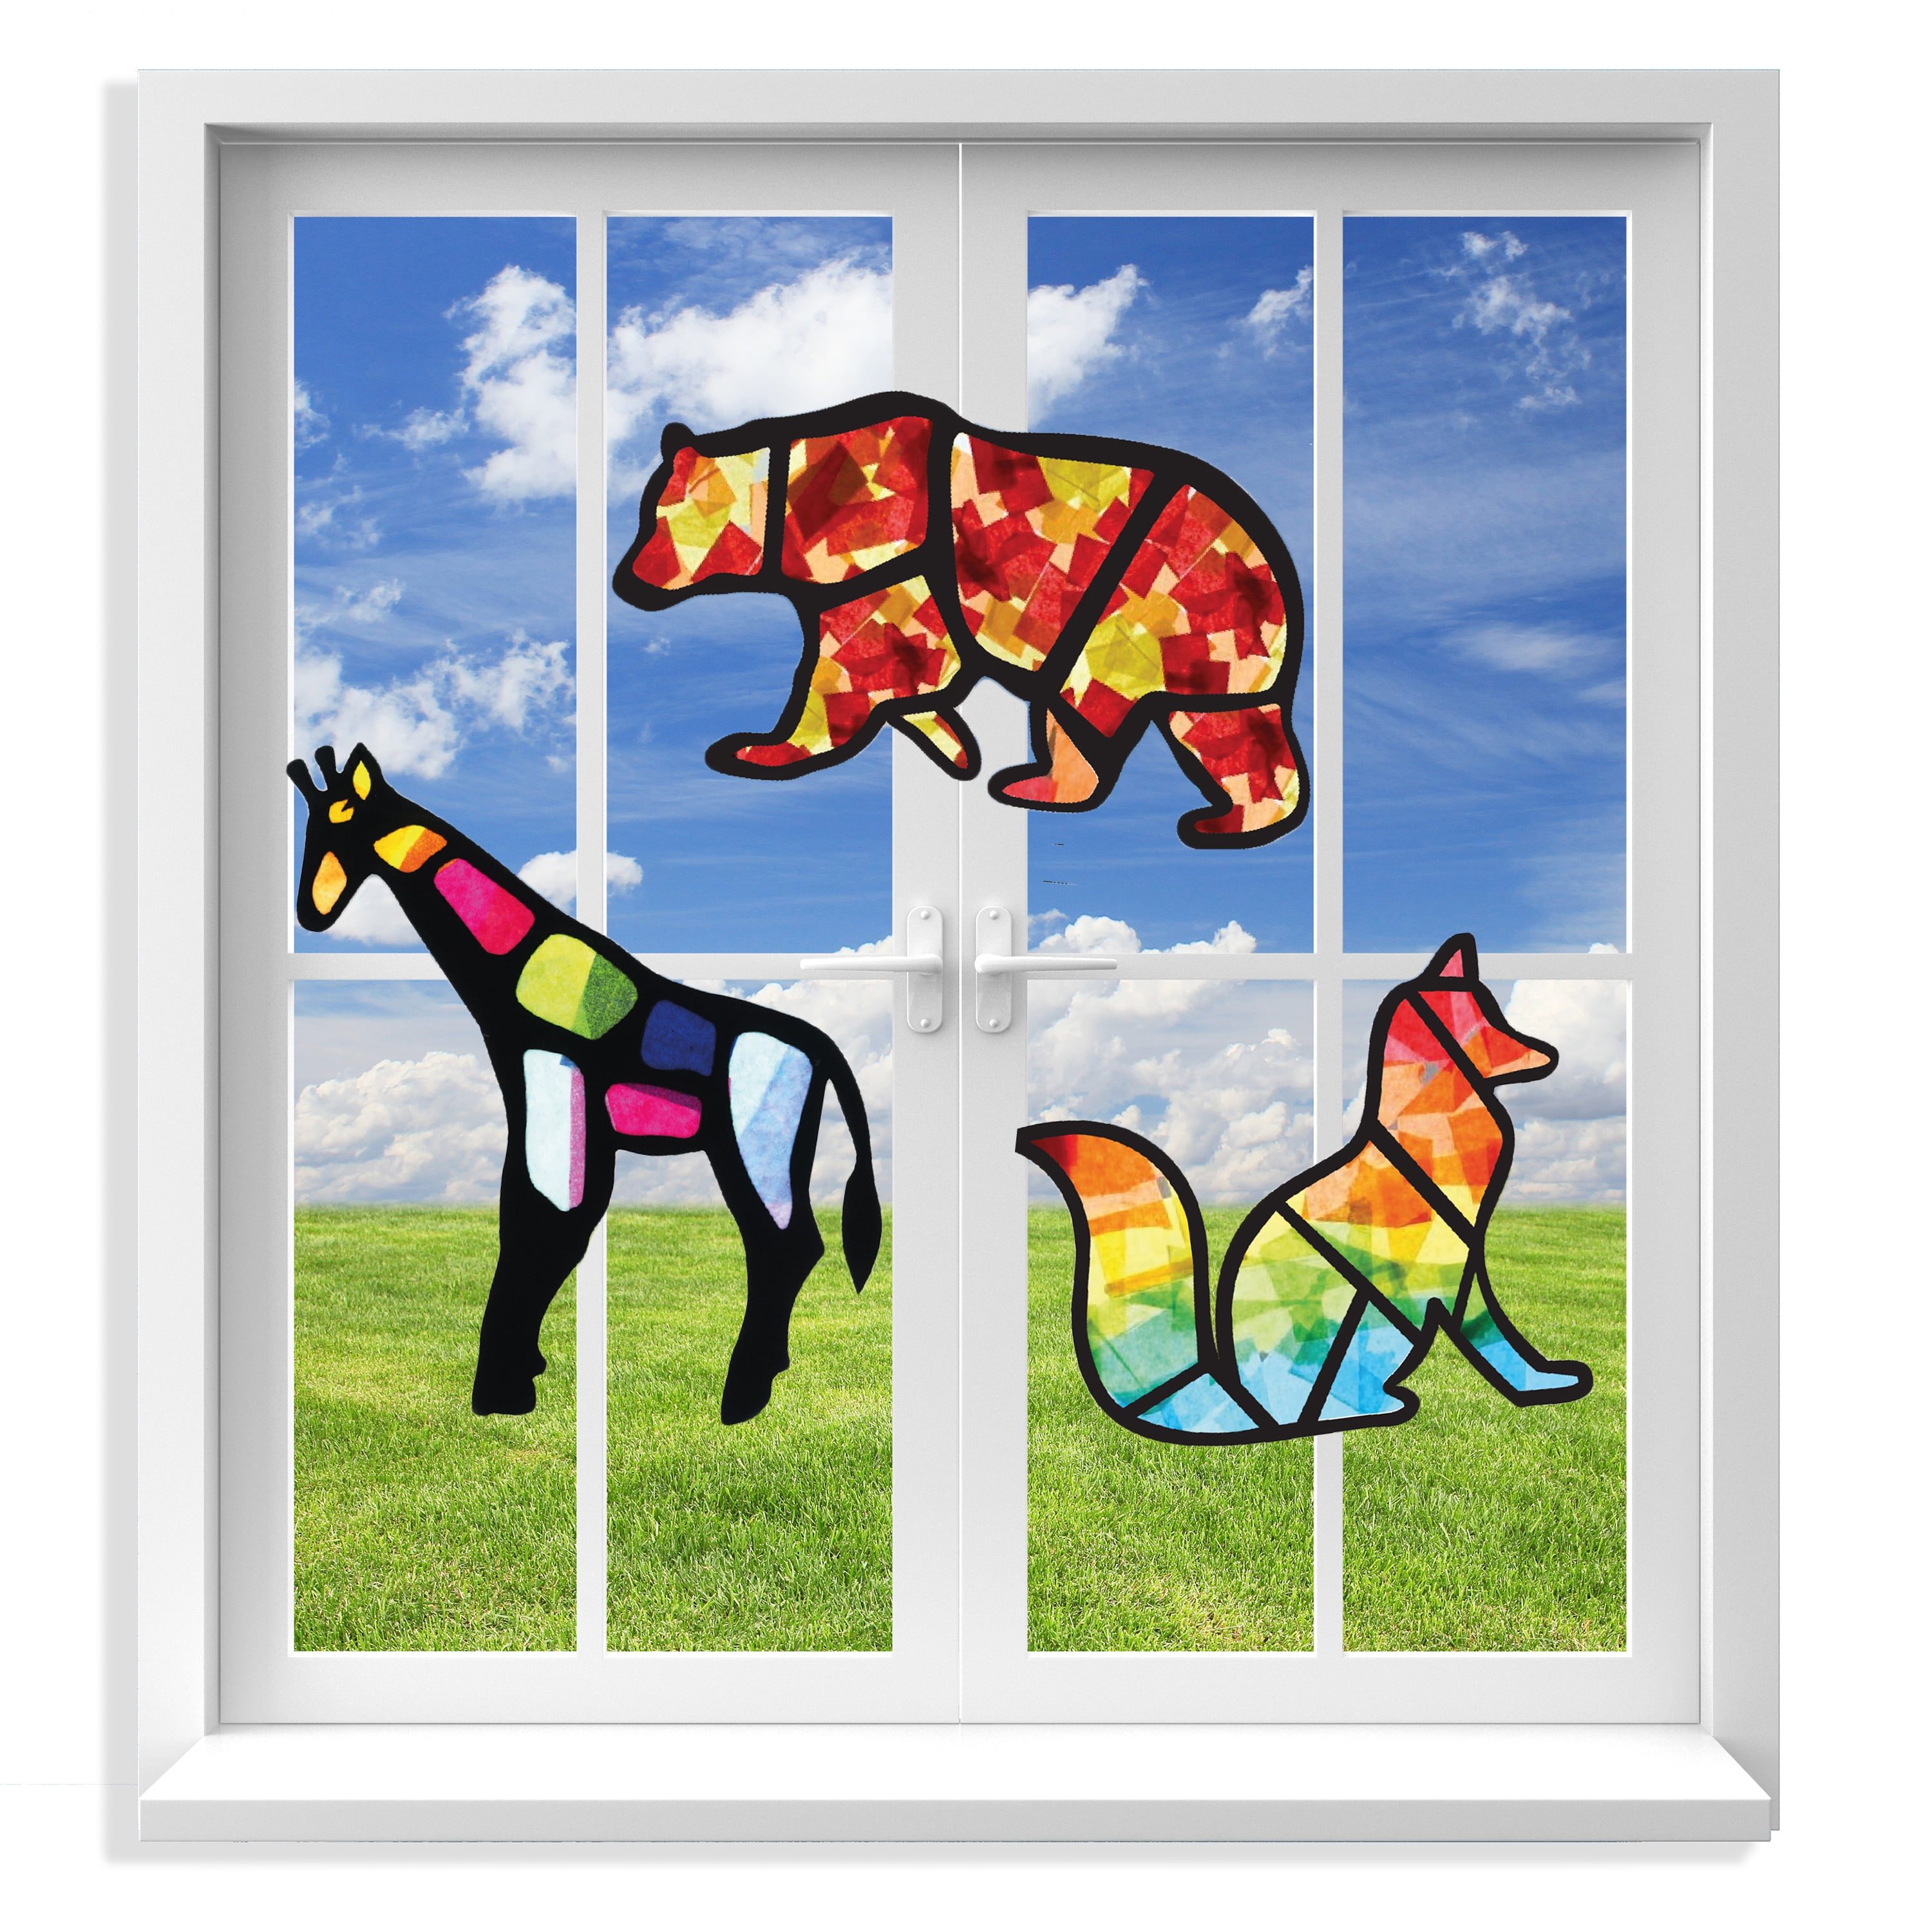 VHALE Suncatcher Kit, Stained Glass Paper Suncatchers Window Art, Children Creative Arts and Crafts, 3 Sets (Animal)